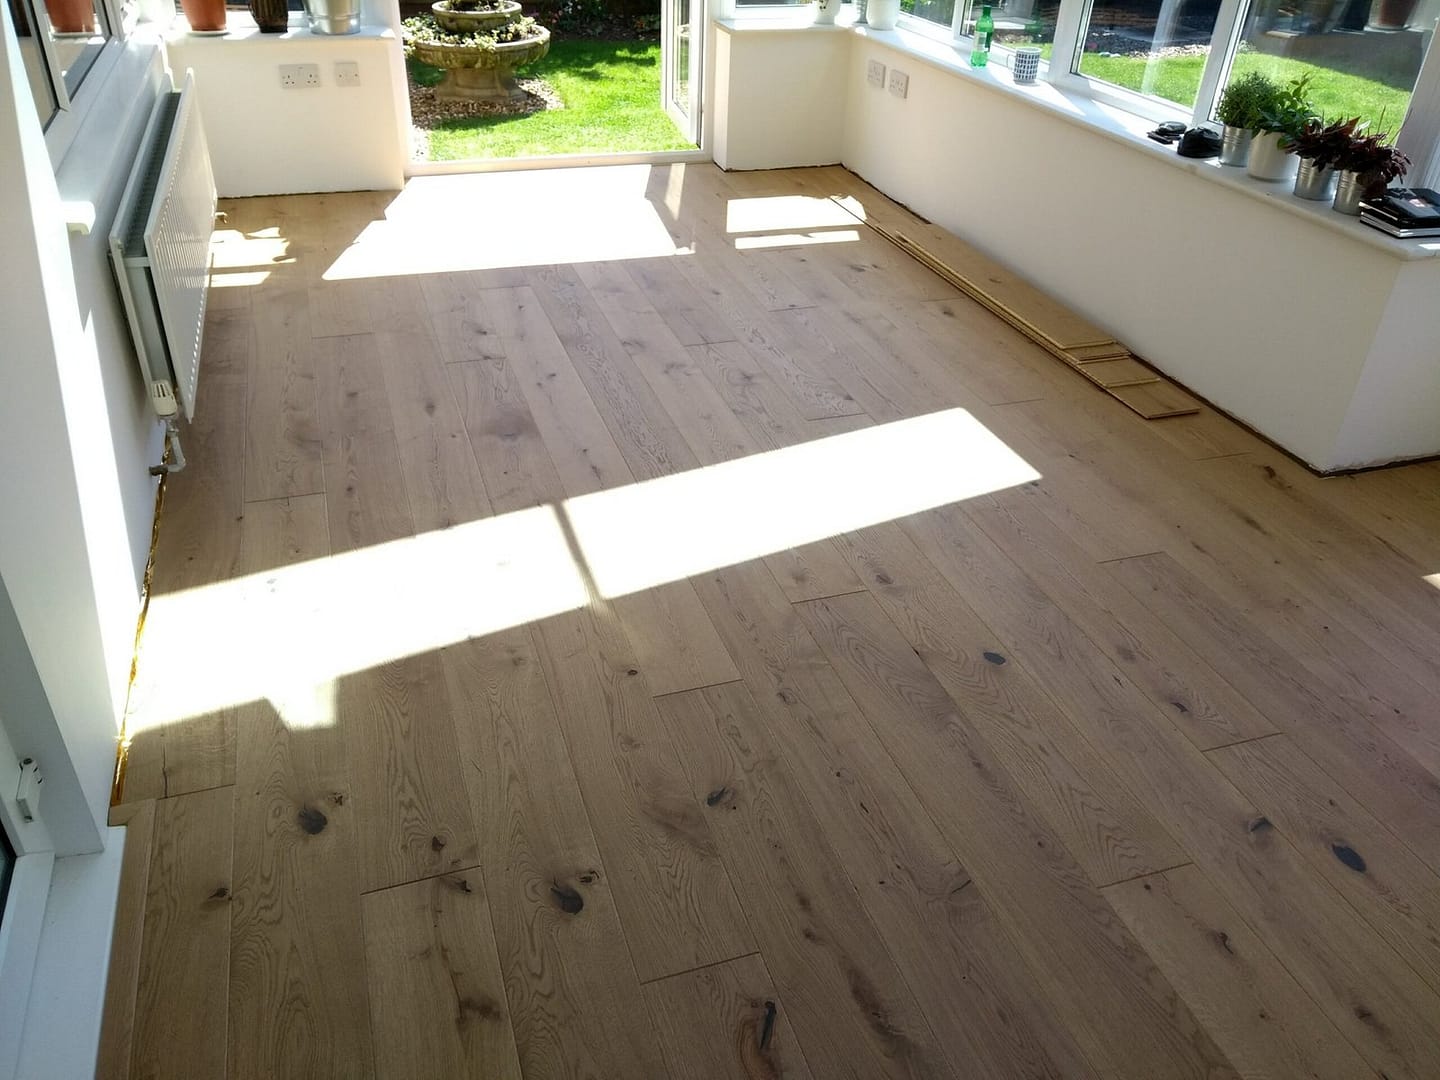 engineered wooden flooring